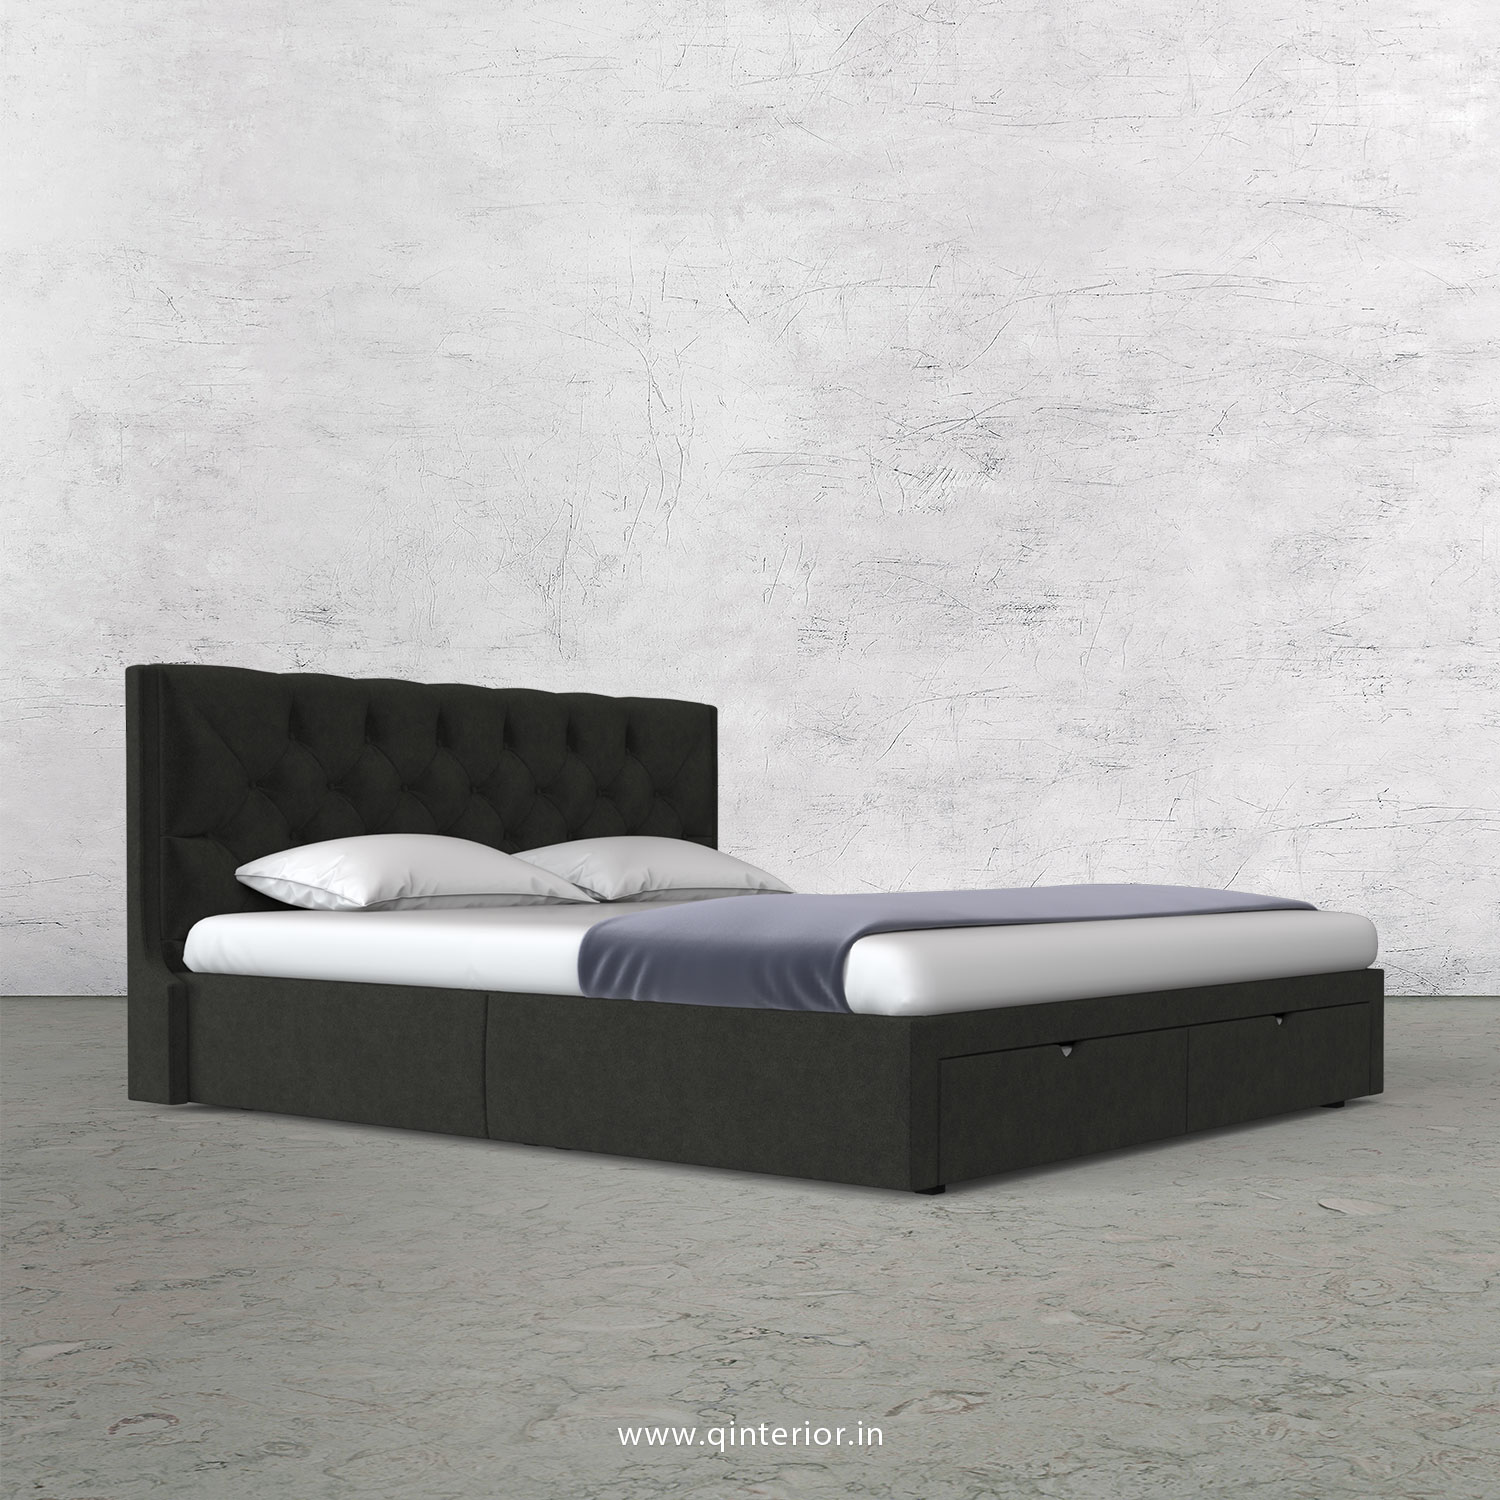 Scorpius King Size Storage Bed in Velvet Fabric - KBD001 VL07